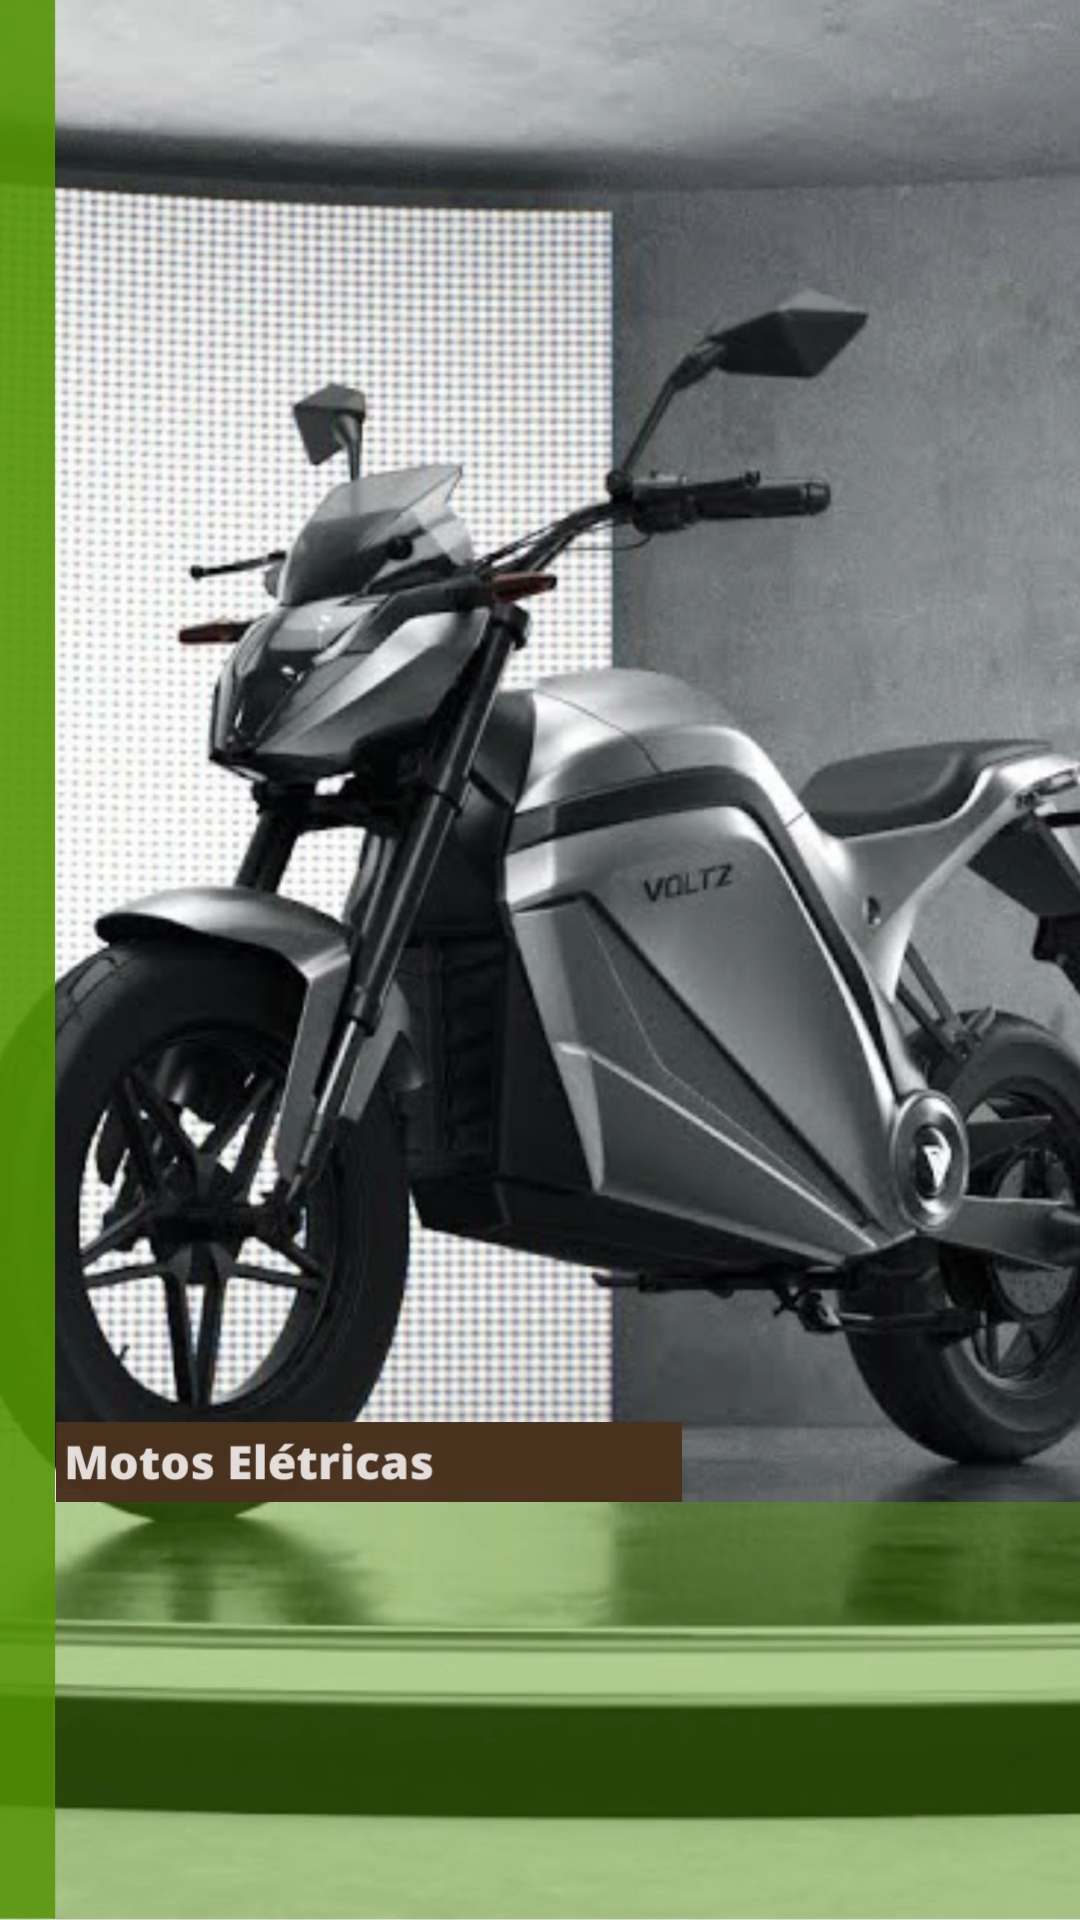 Motos elétricas baratas: veja a Metacycle, de 5 mil dólares - Motonline